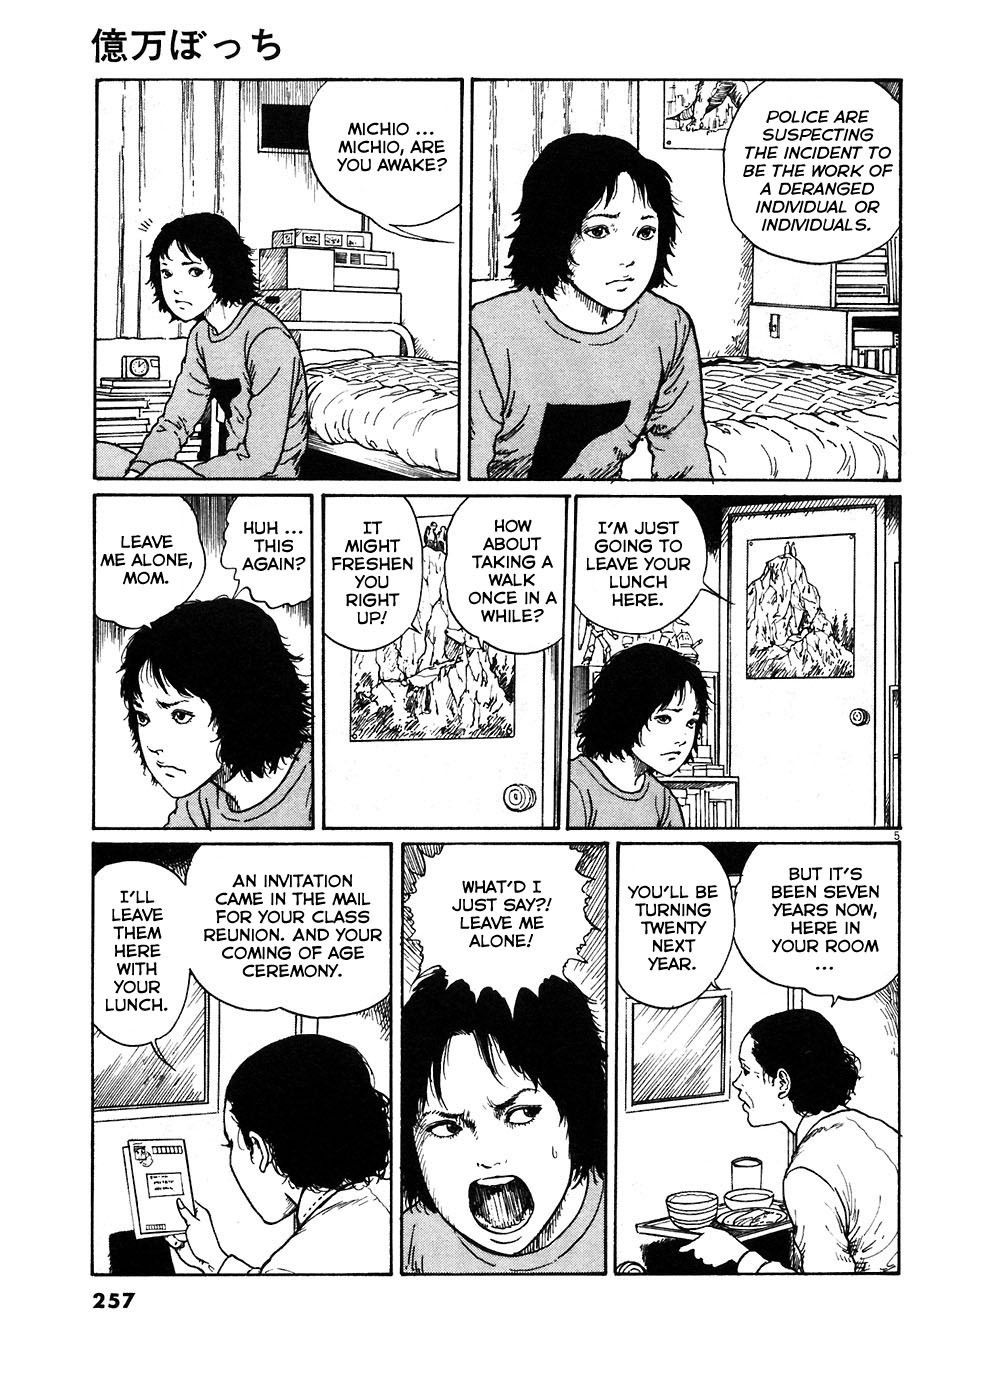 Uji Nyali 20 Manga Horor Karya Junji Ito Ini Bikin Merinding